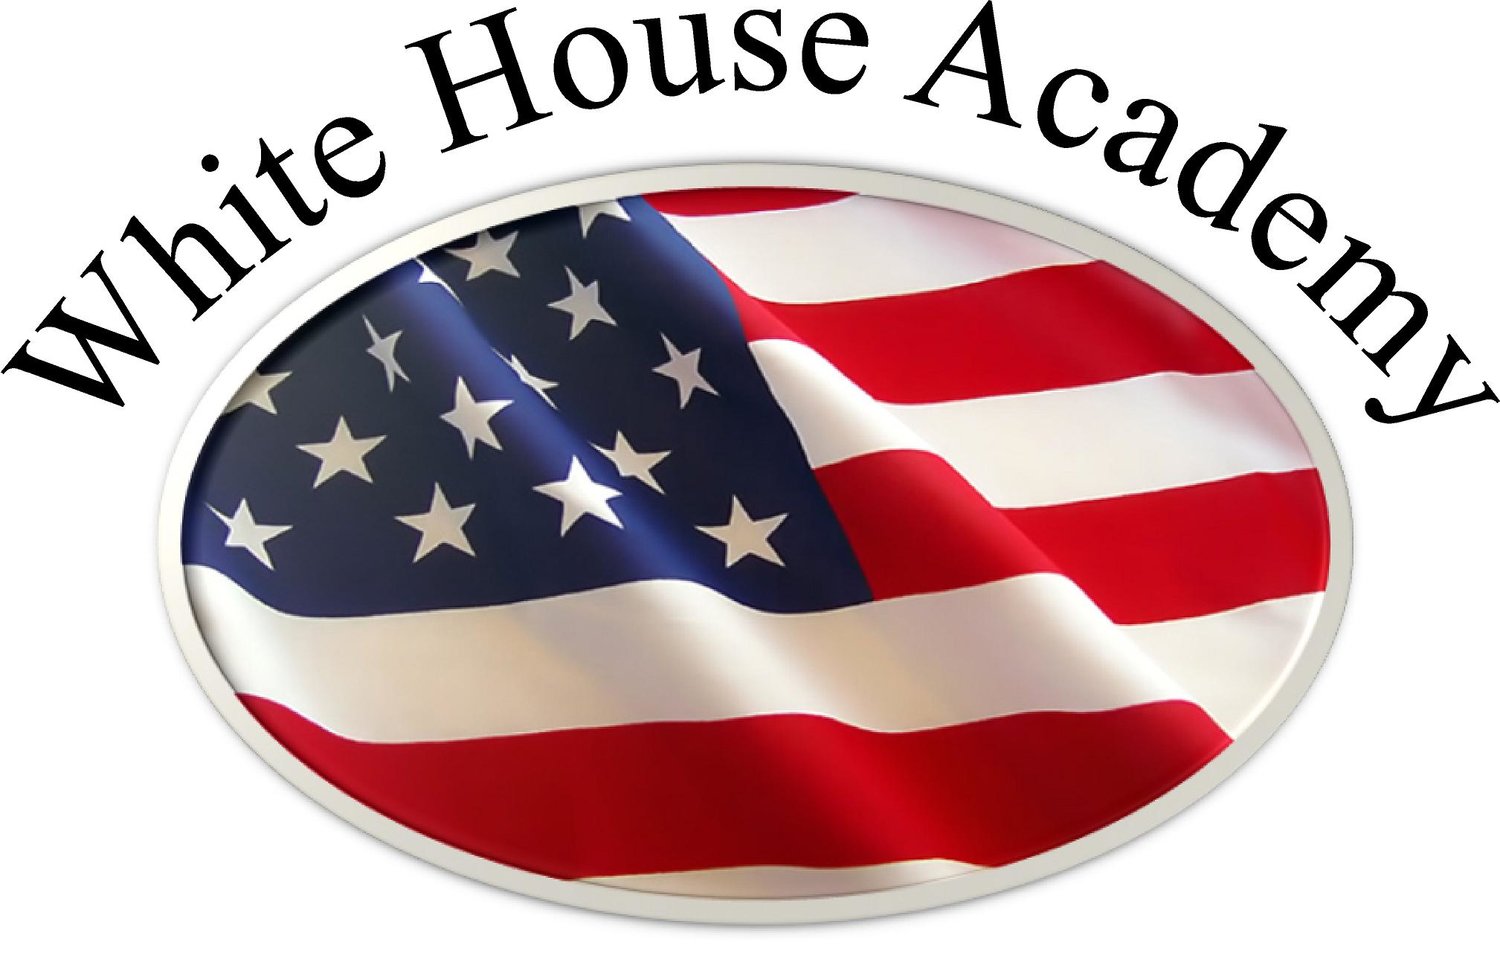 White House Academy